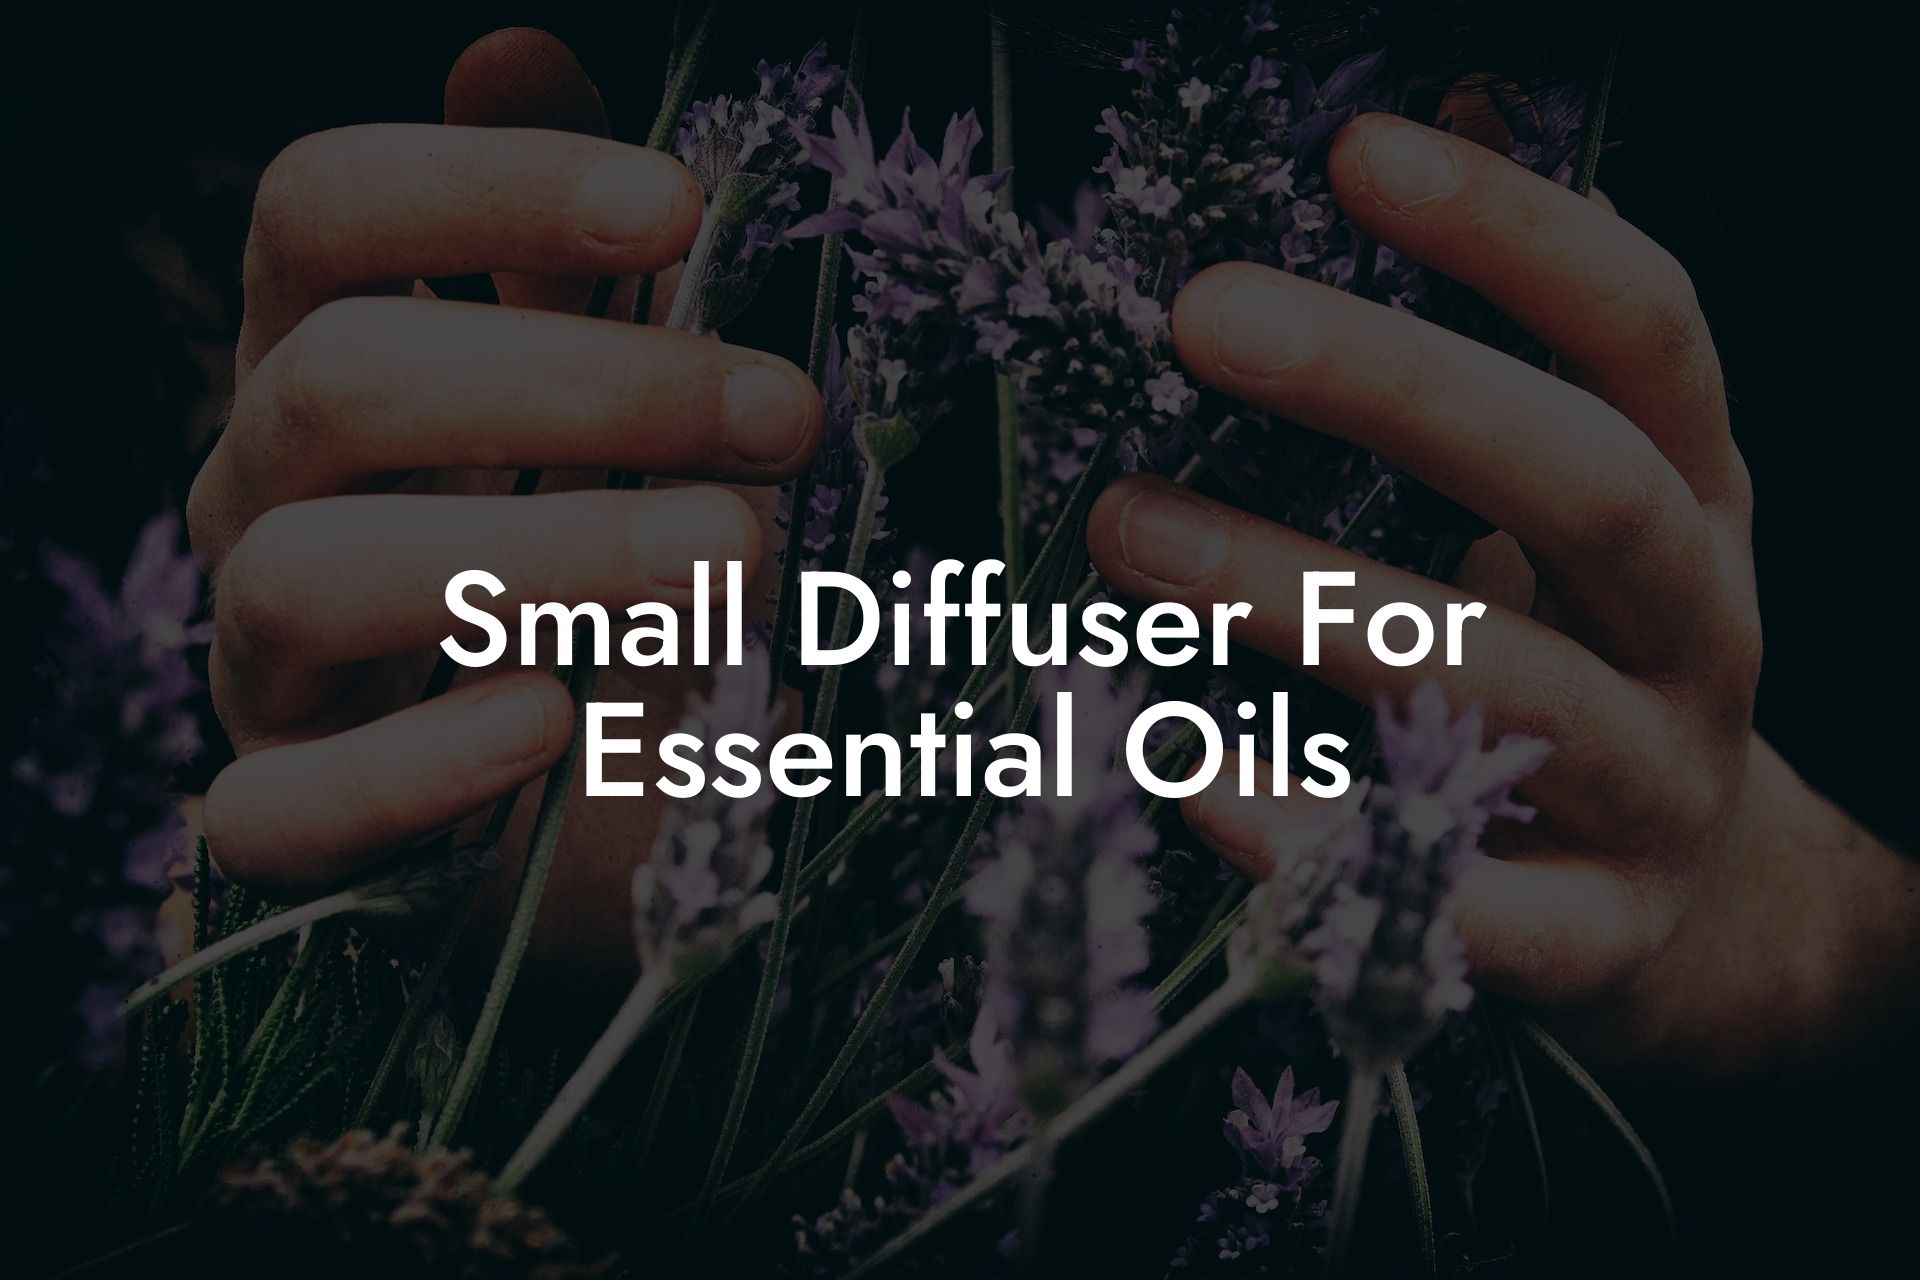 Small Diffuser For Essential Oils